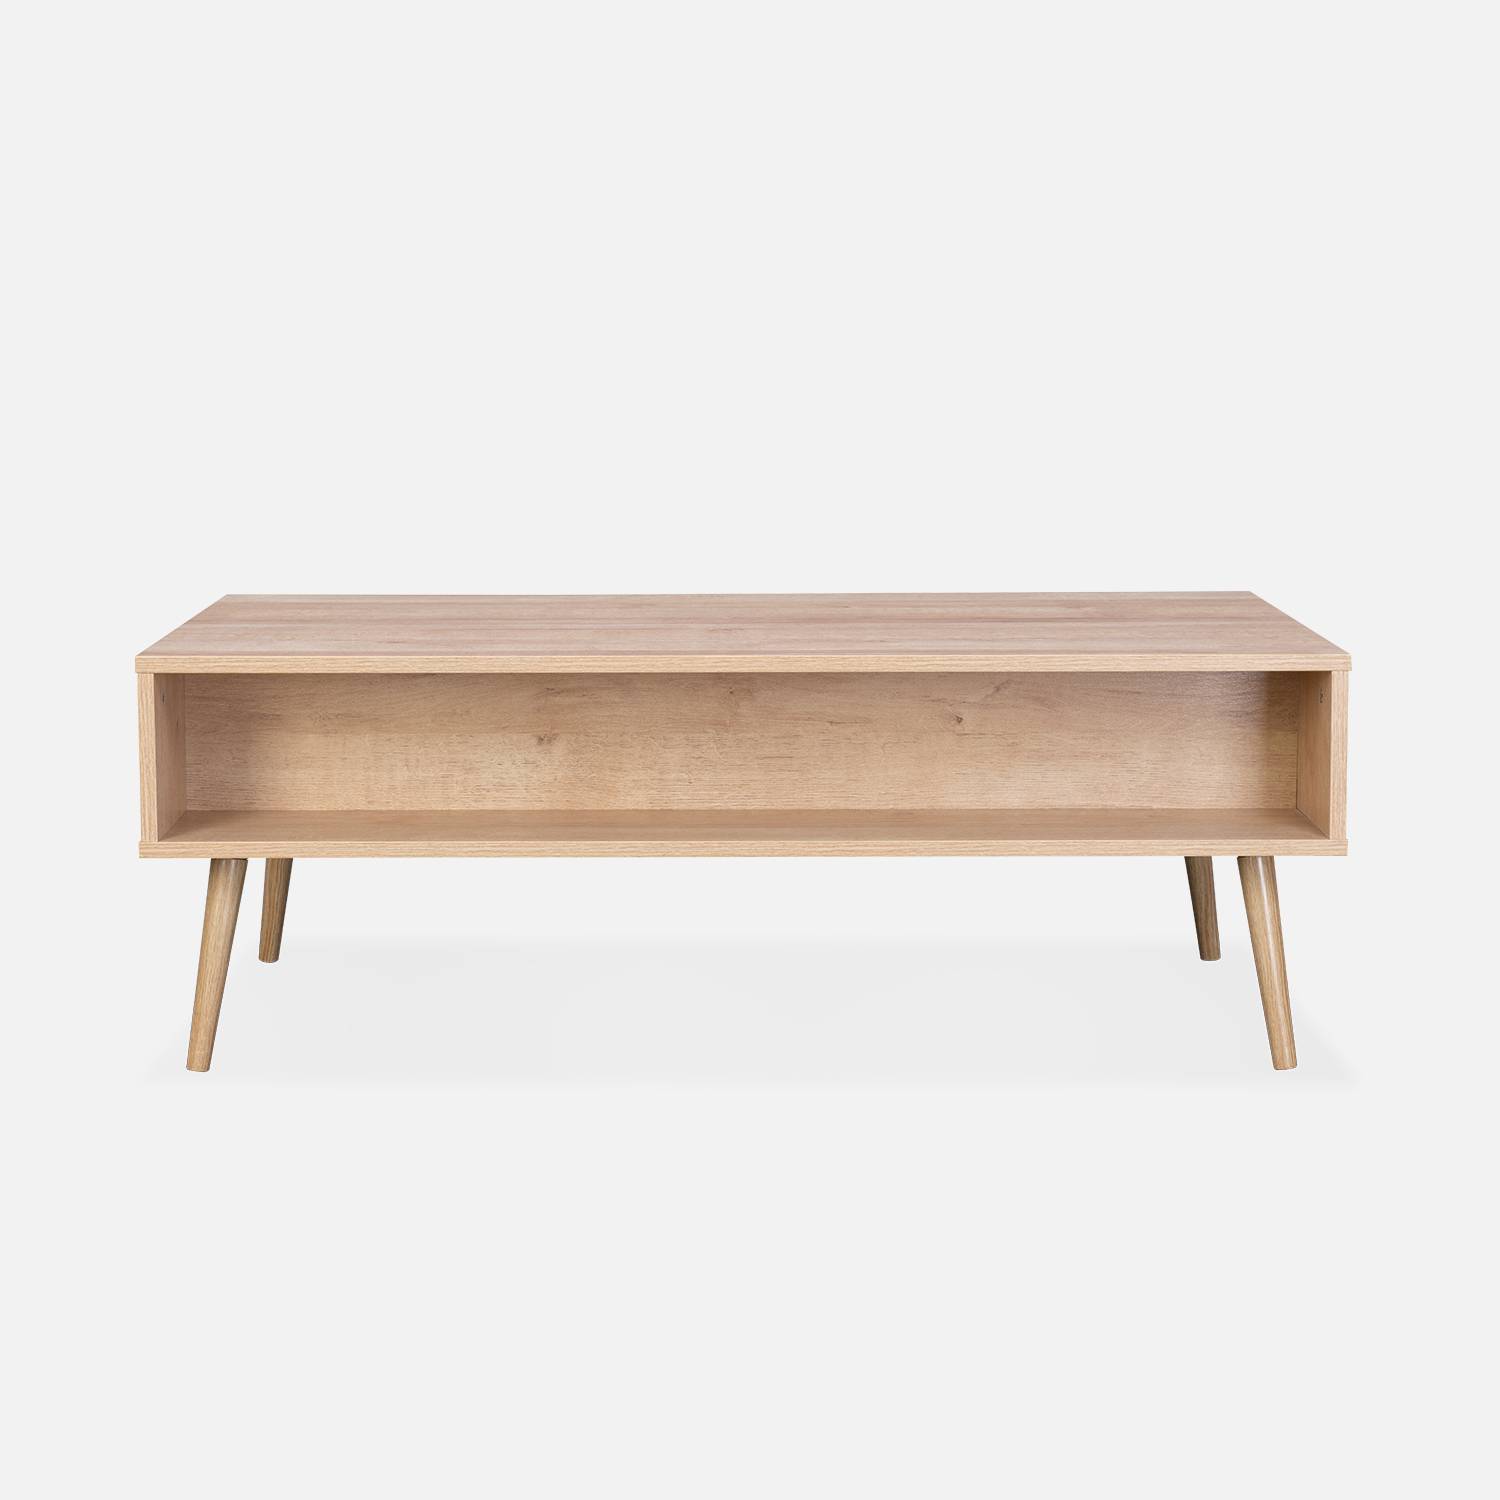 Wood and woven rattan coffee table with storage, 110x59x39cm, Natural, Boheme,sweeek,Photo4